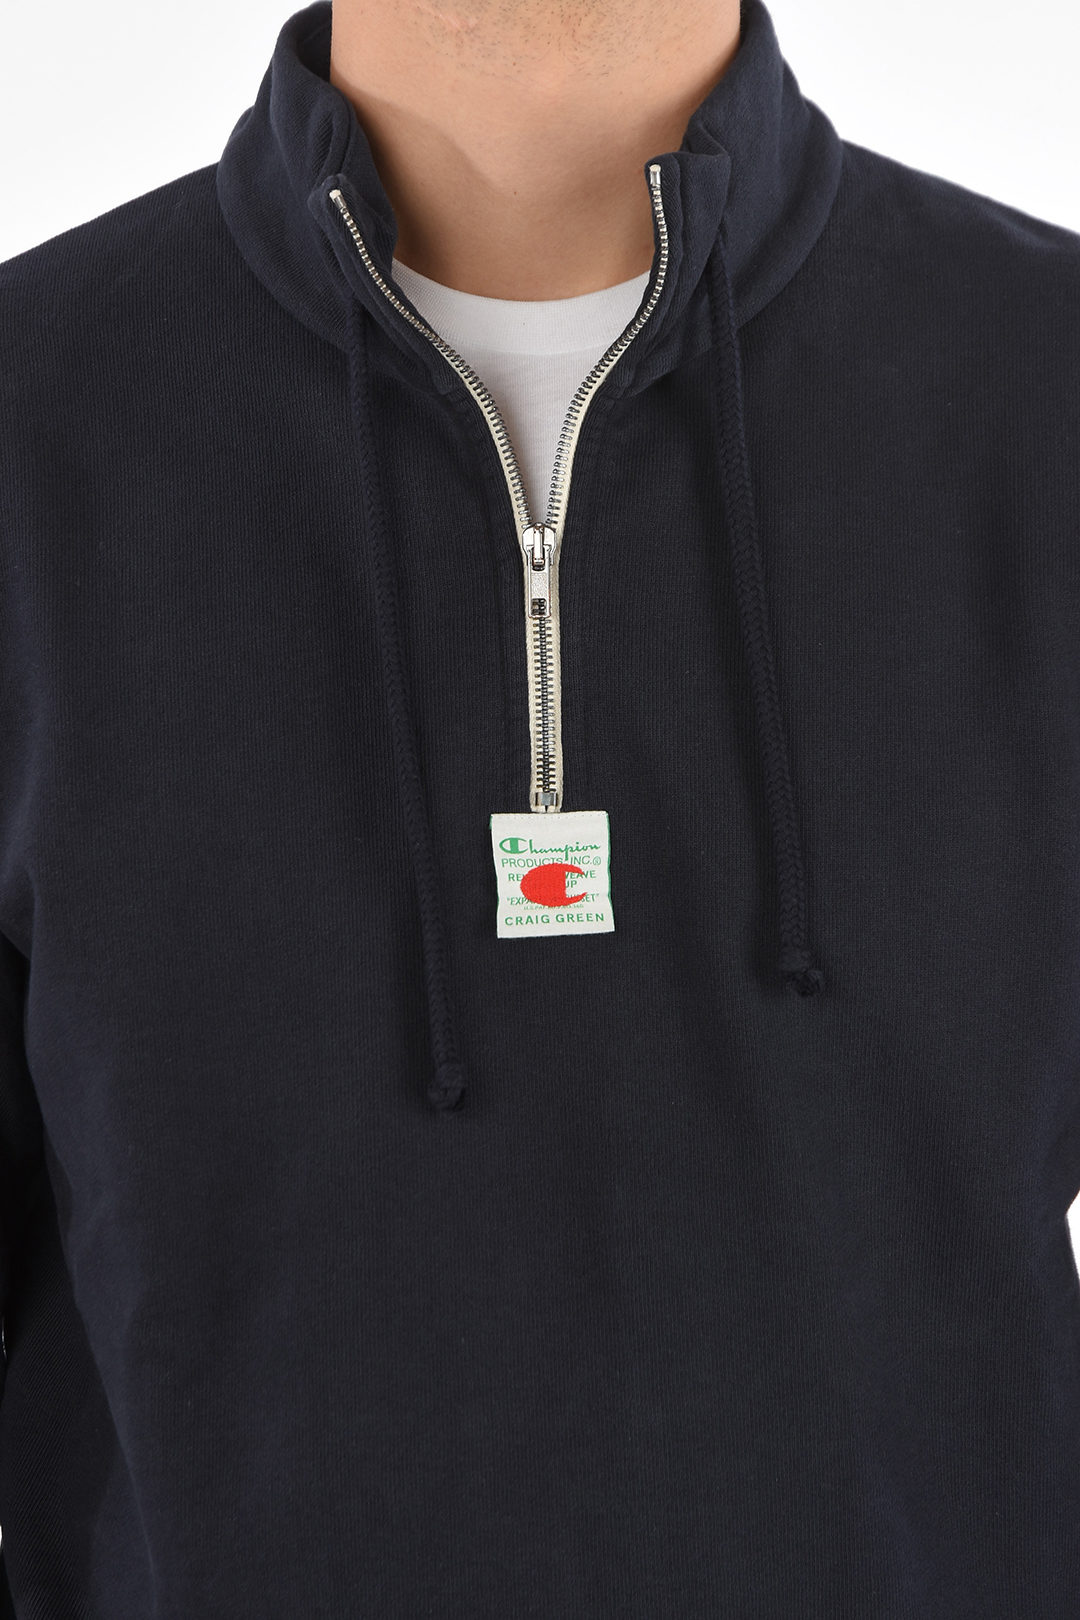 Champion CRAIG GREEN half zip mock-neck sweatshirt men - Glamood Outlet | Sweatshirts